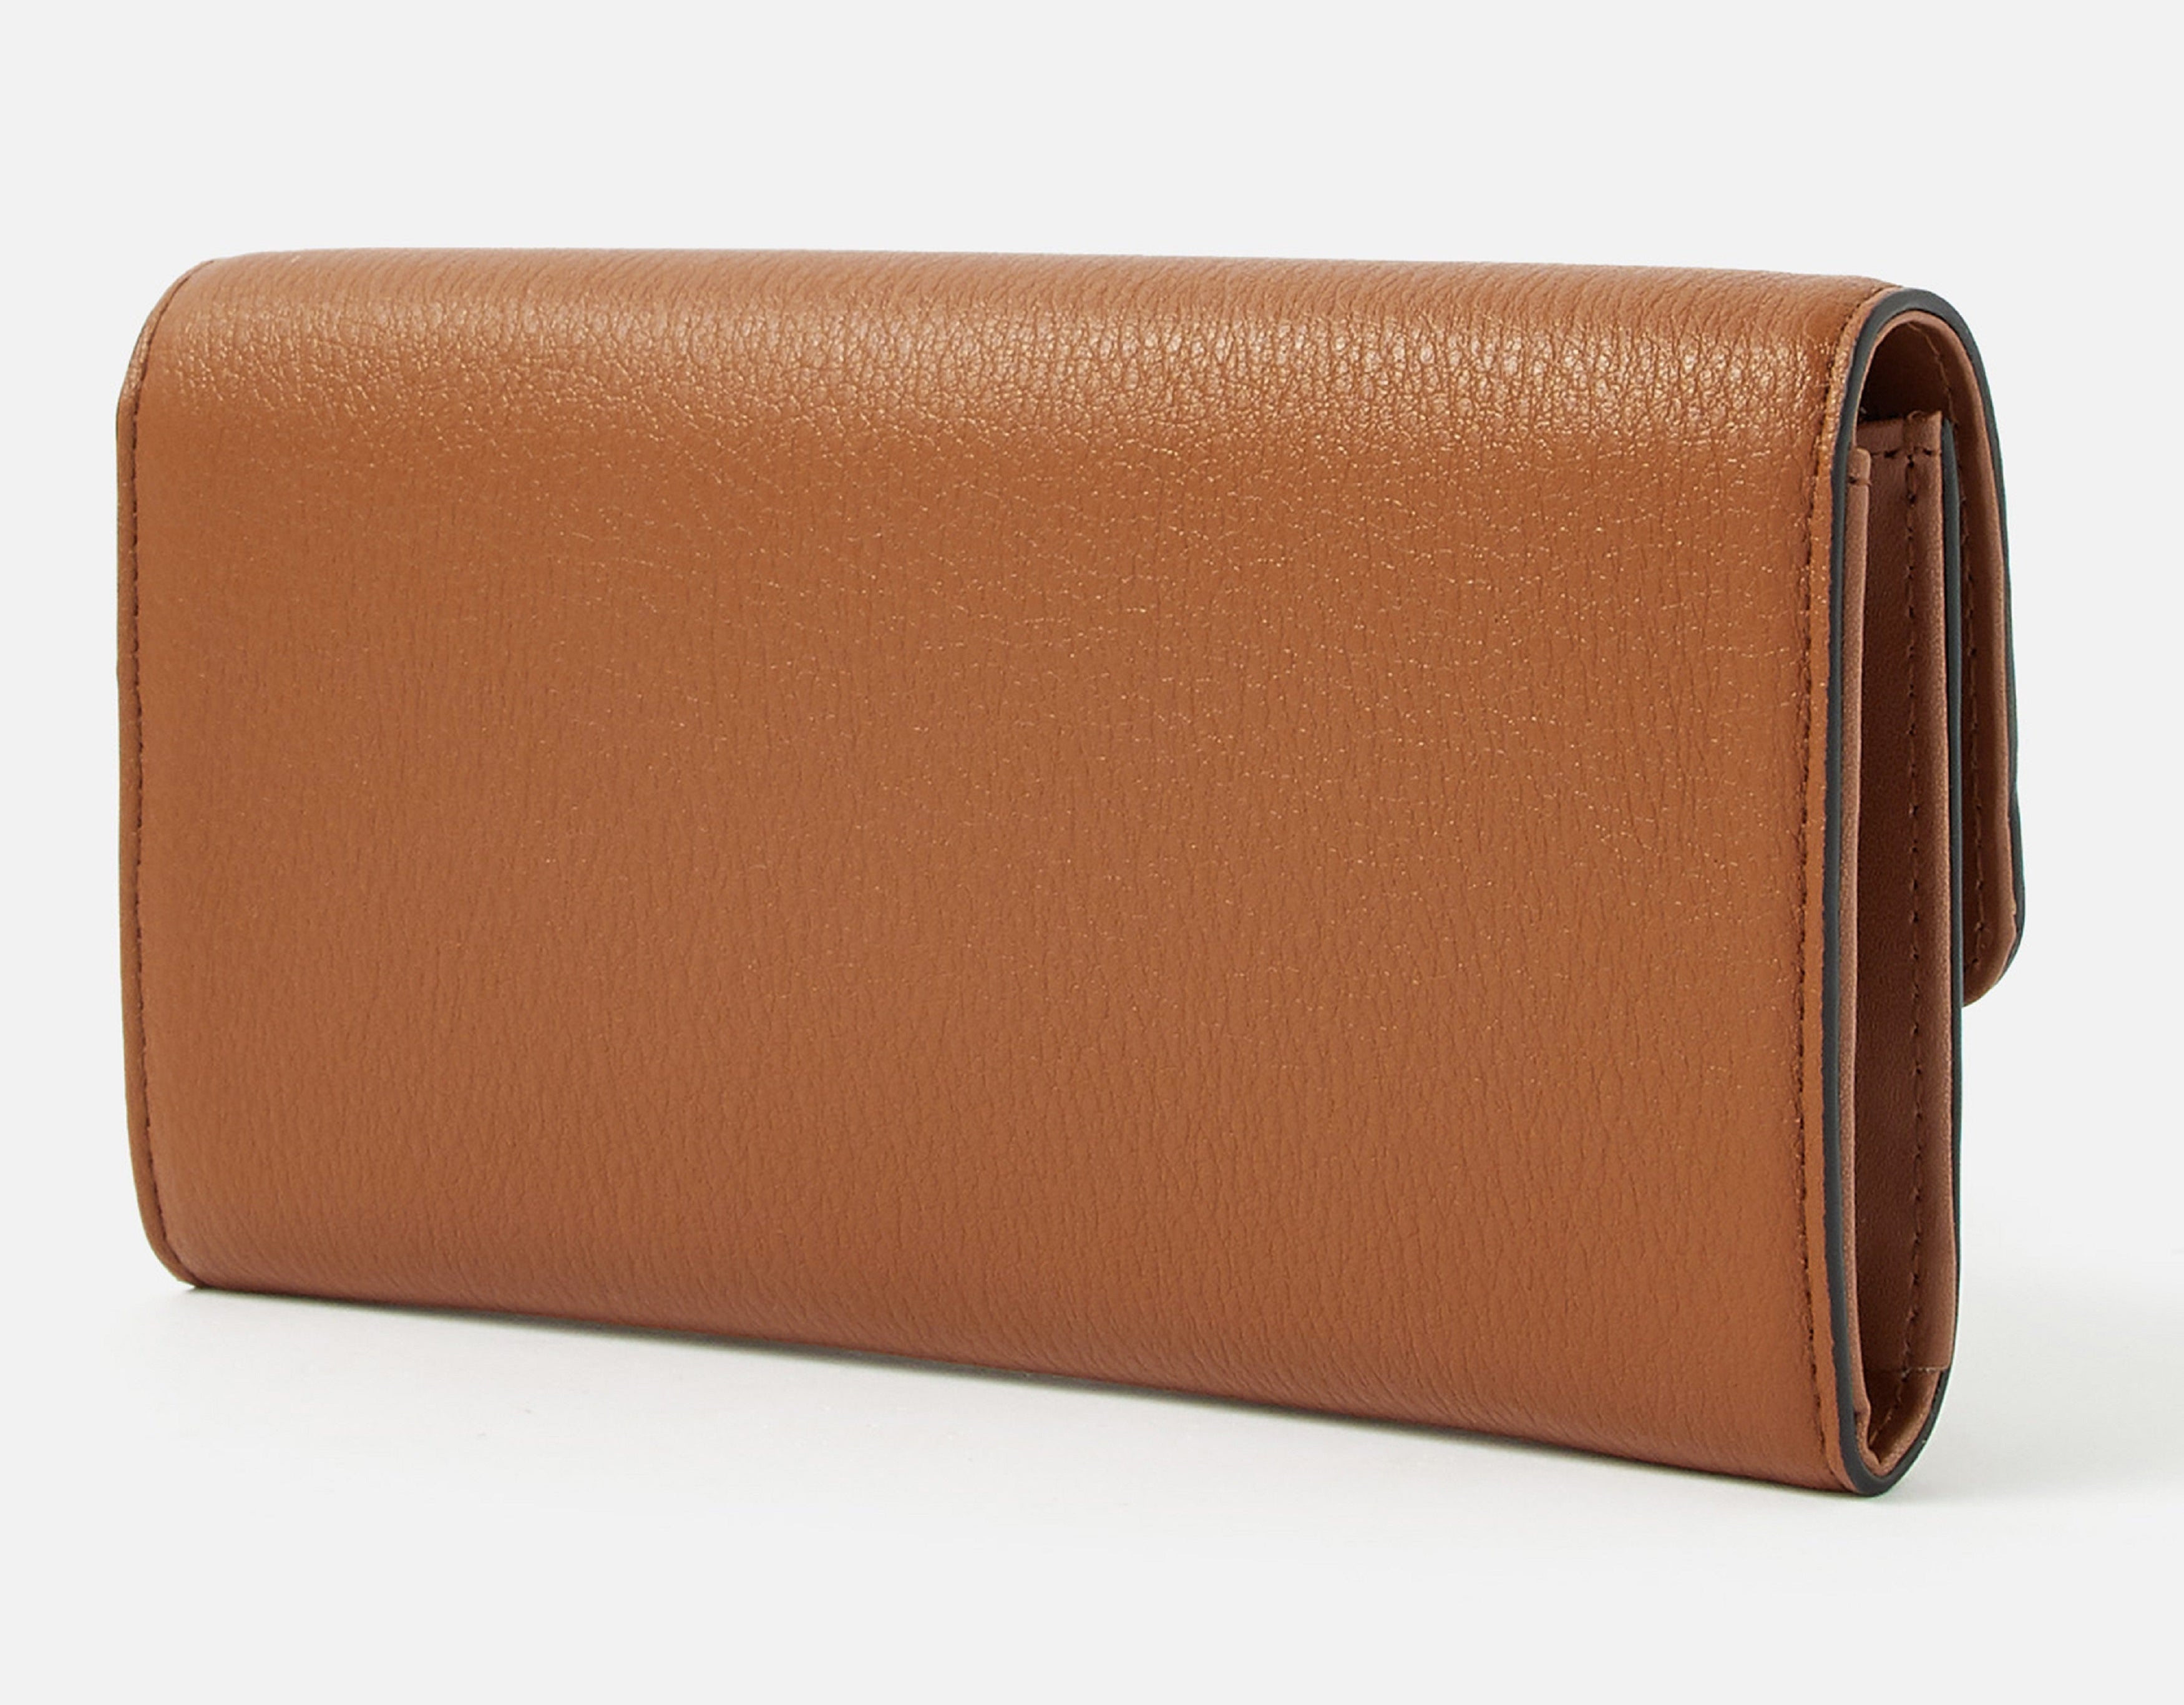 Accessorize London women's Tan Large A Stud Wallet purse